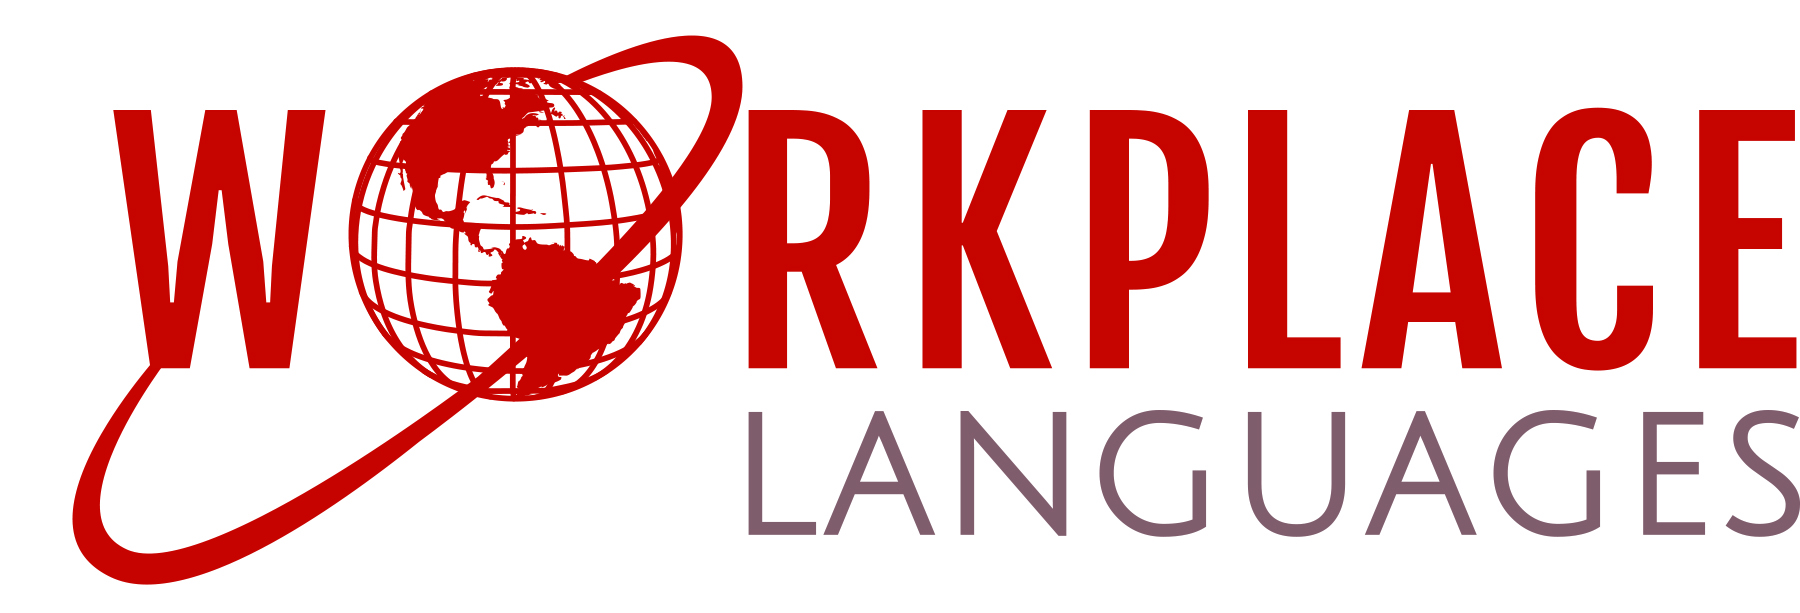 Workplace Languages Logo